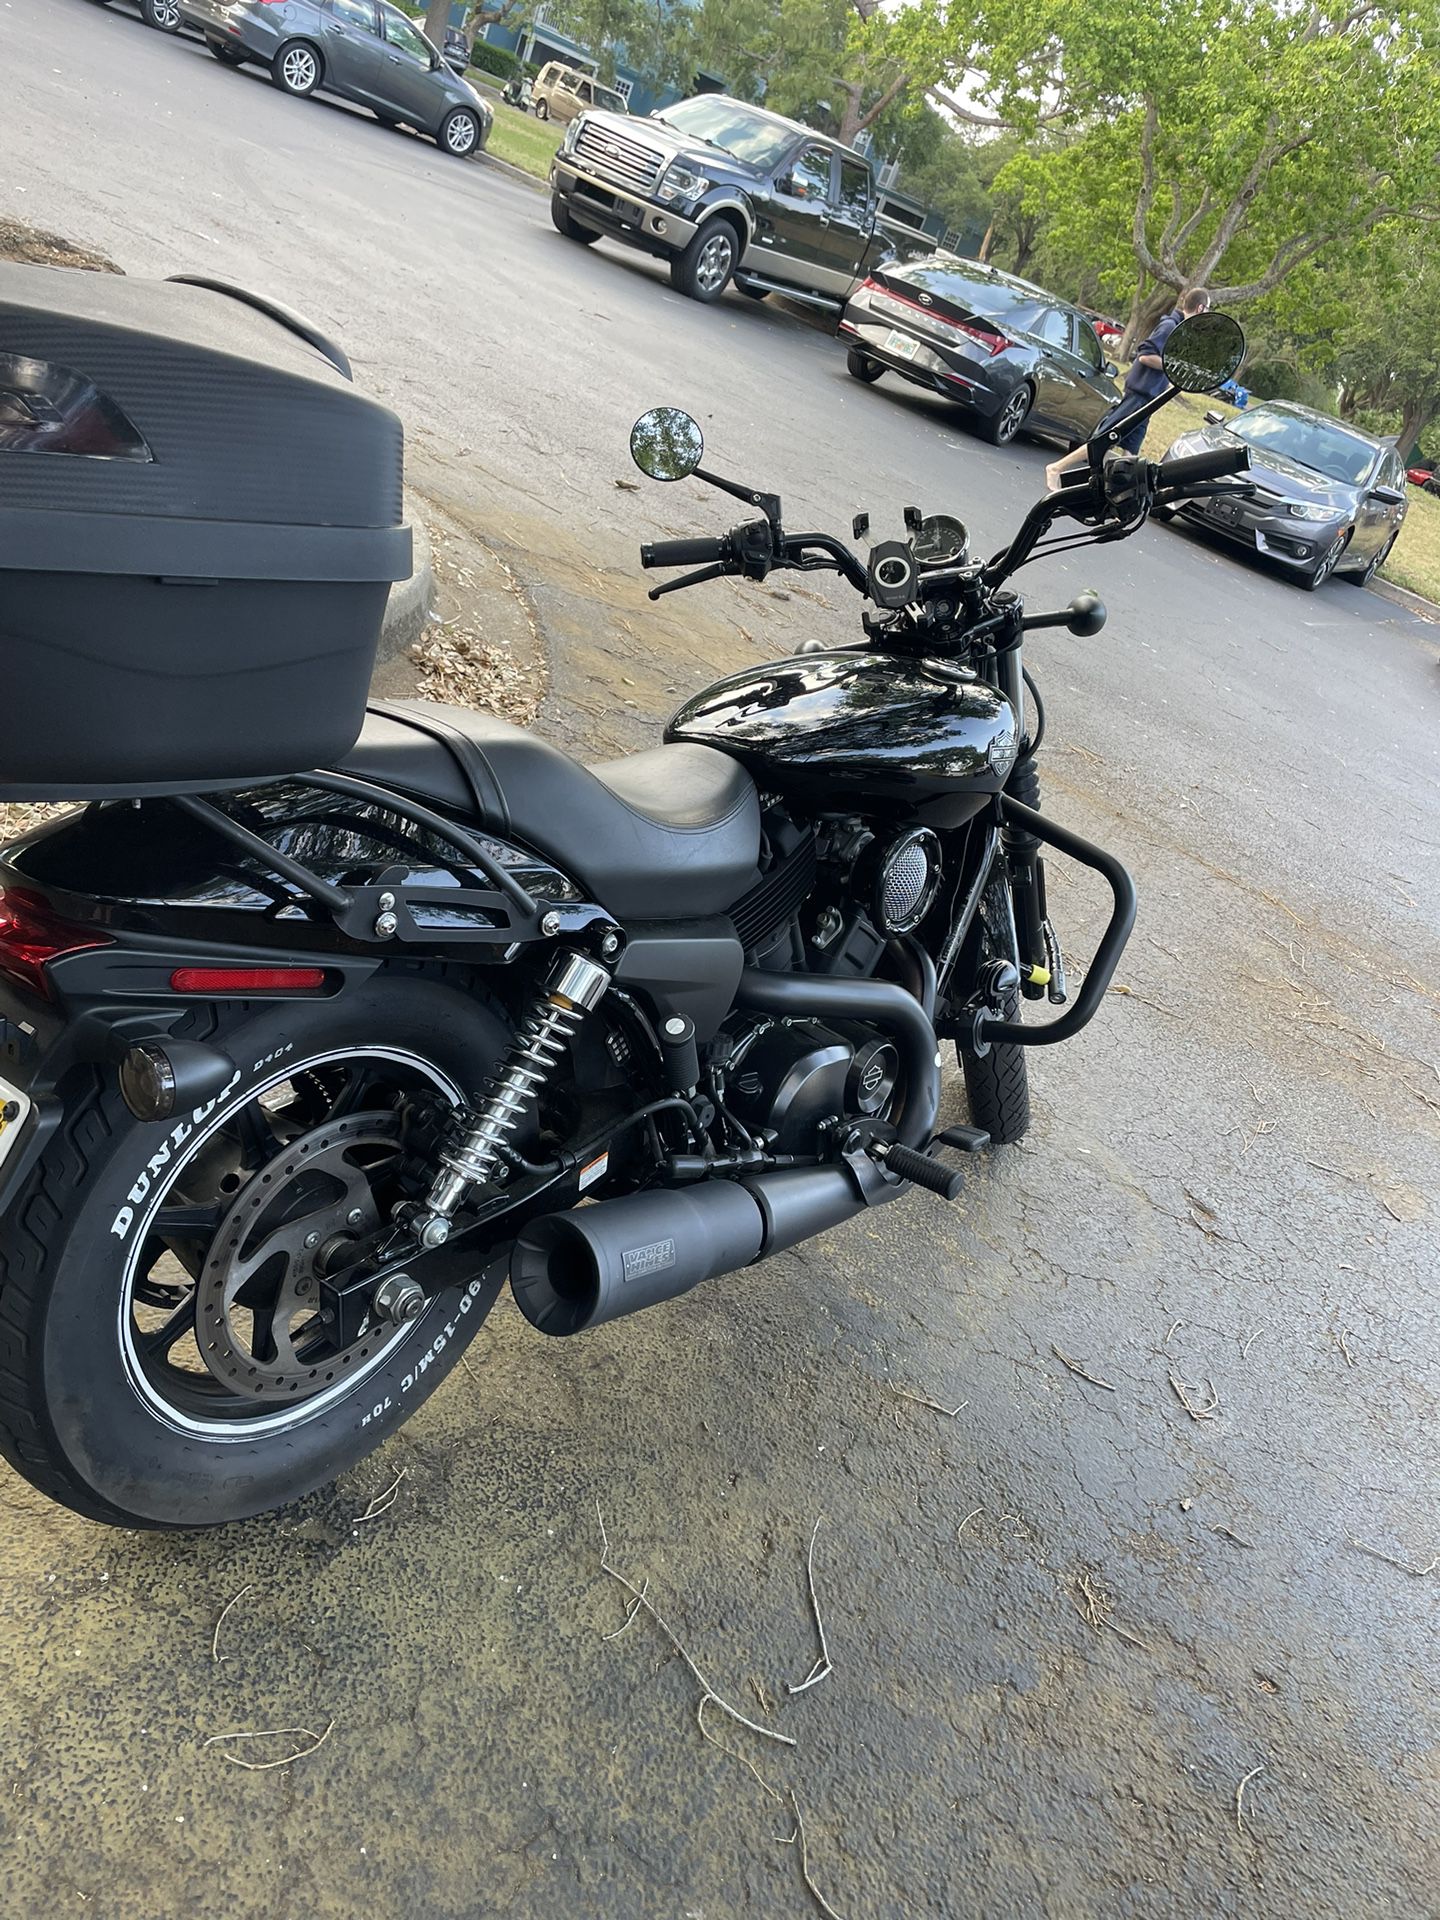 2019 Harley Davidson 500 street